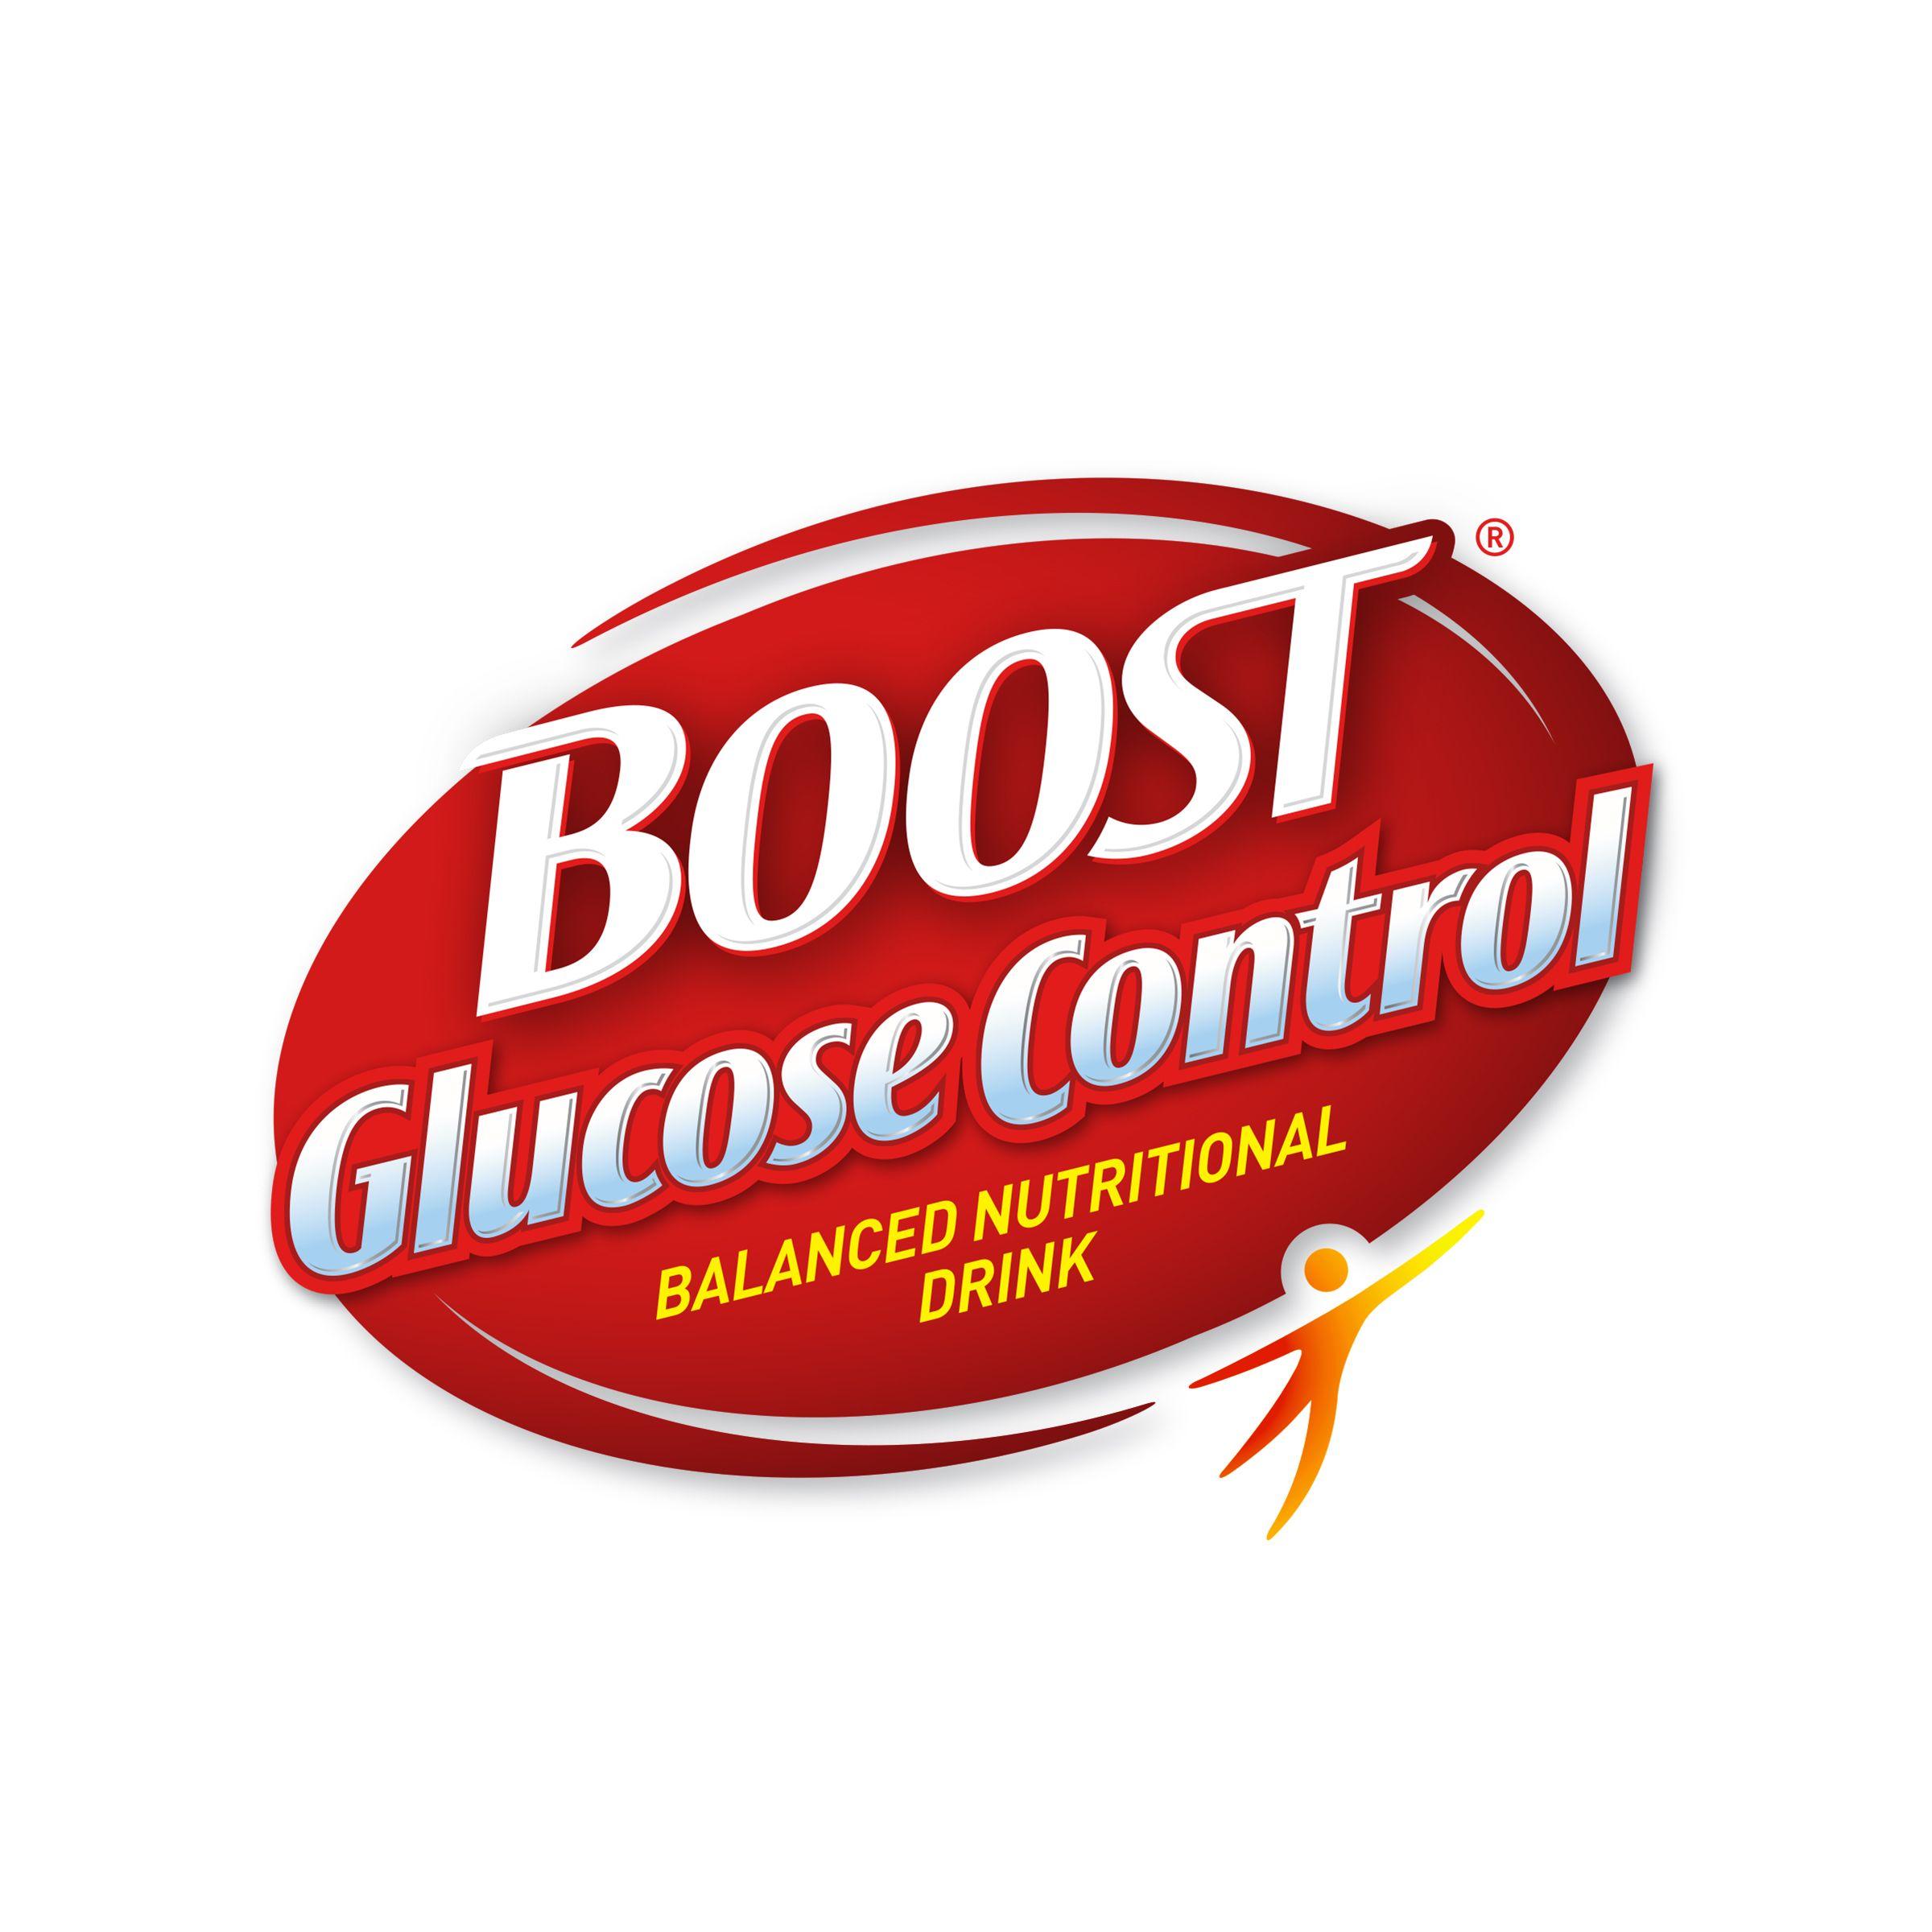 Boost Nutritional Drink Logo - Boost Glucose Control Nutritional Drink, Very Vanilla, 8 Fl oz, 6 Ct ...